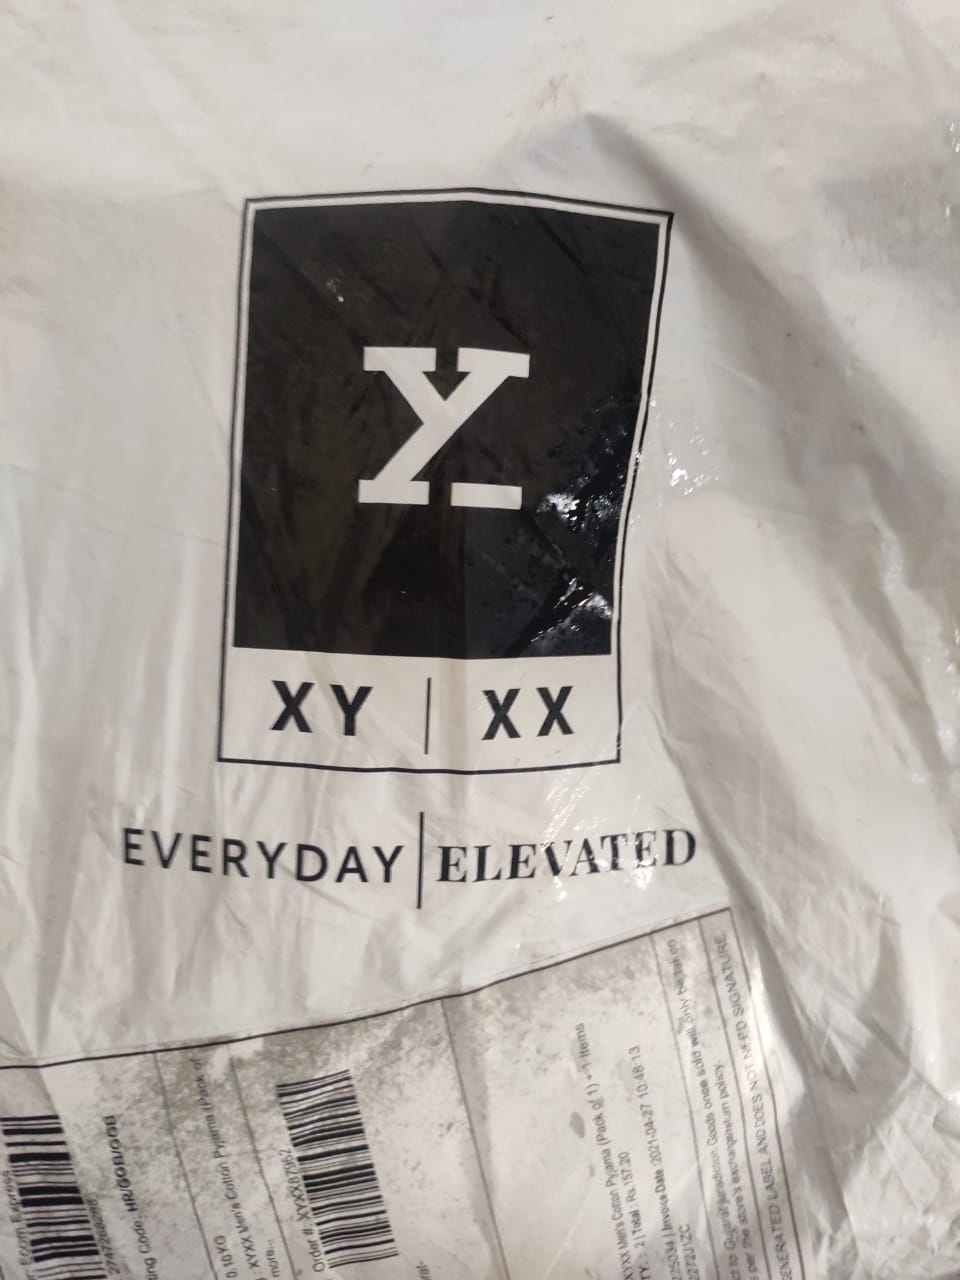 xyxx packing